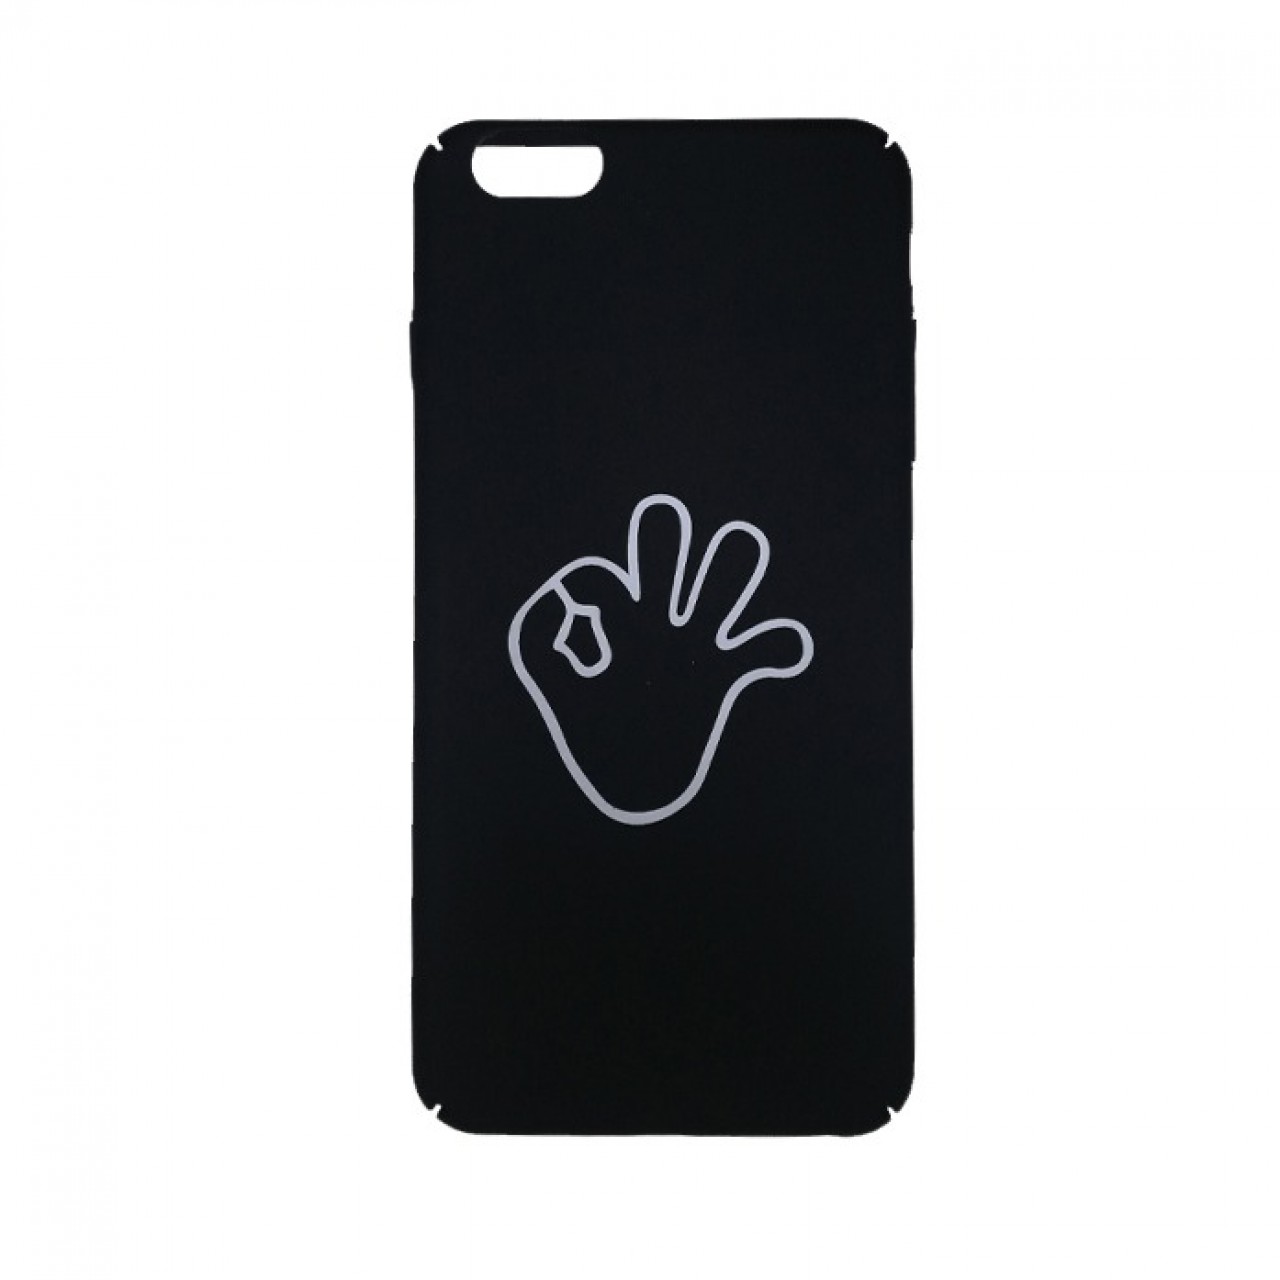 iPhone 6 Plus Fantastic Logo Hard Case - Black